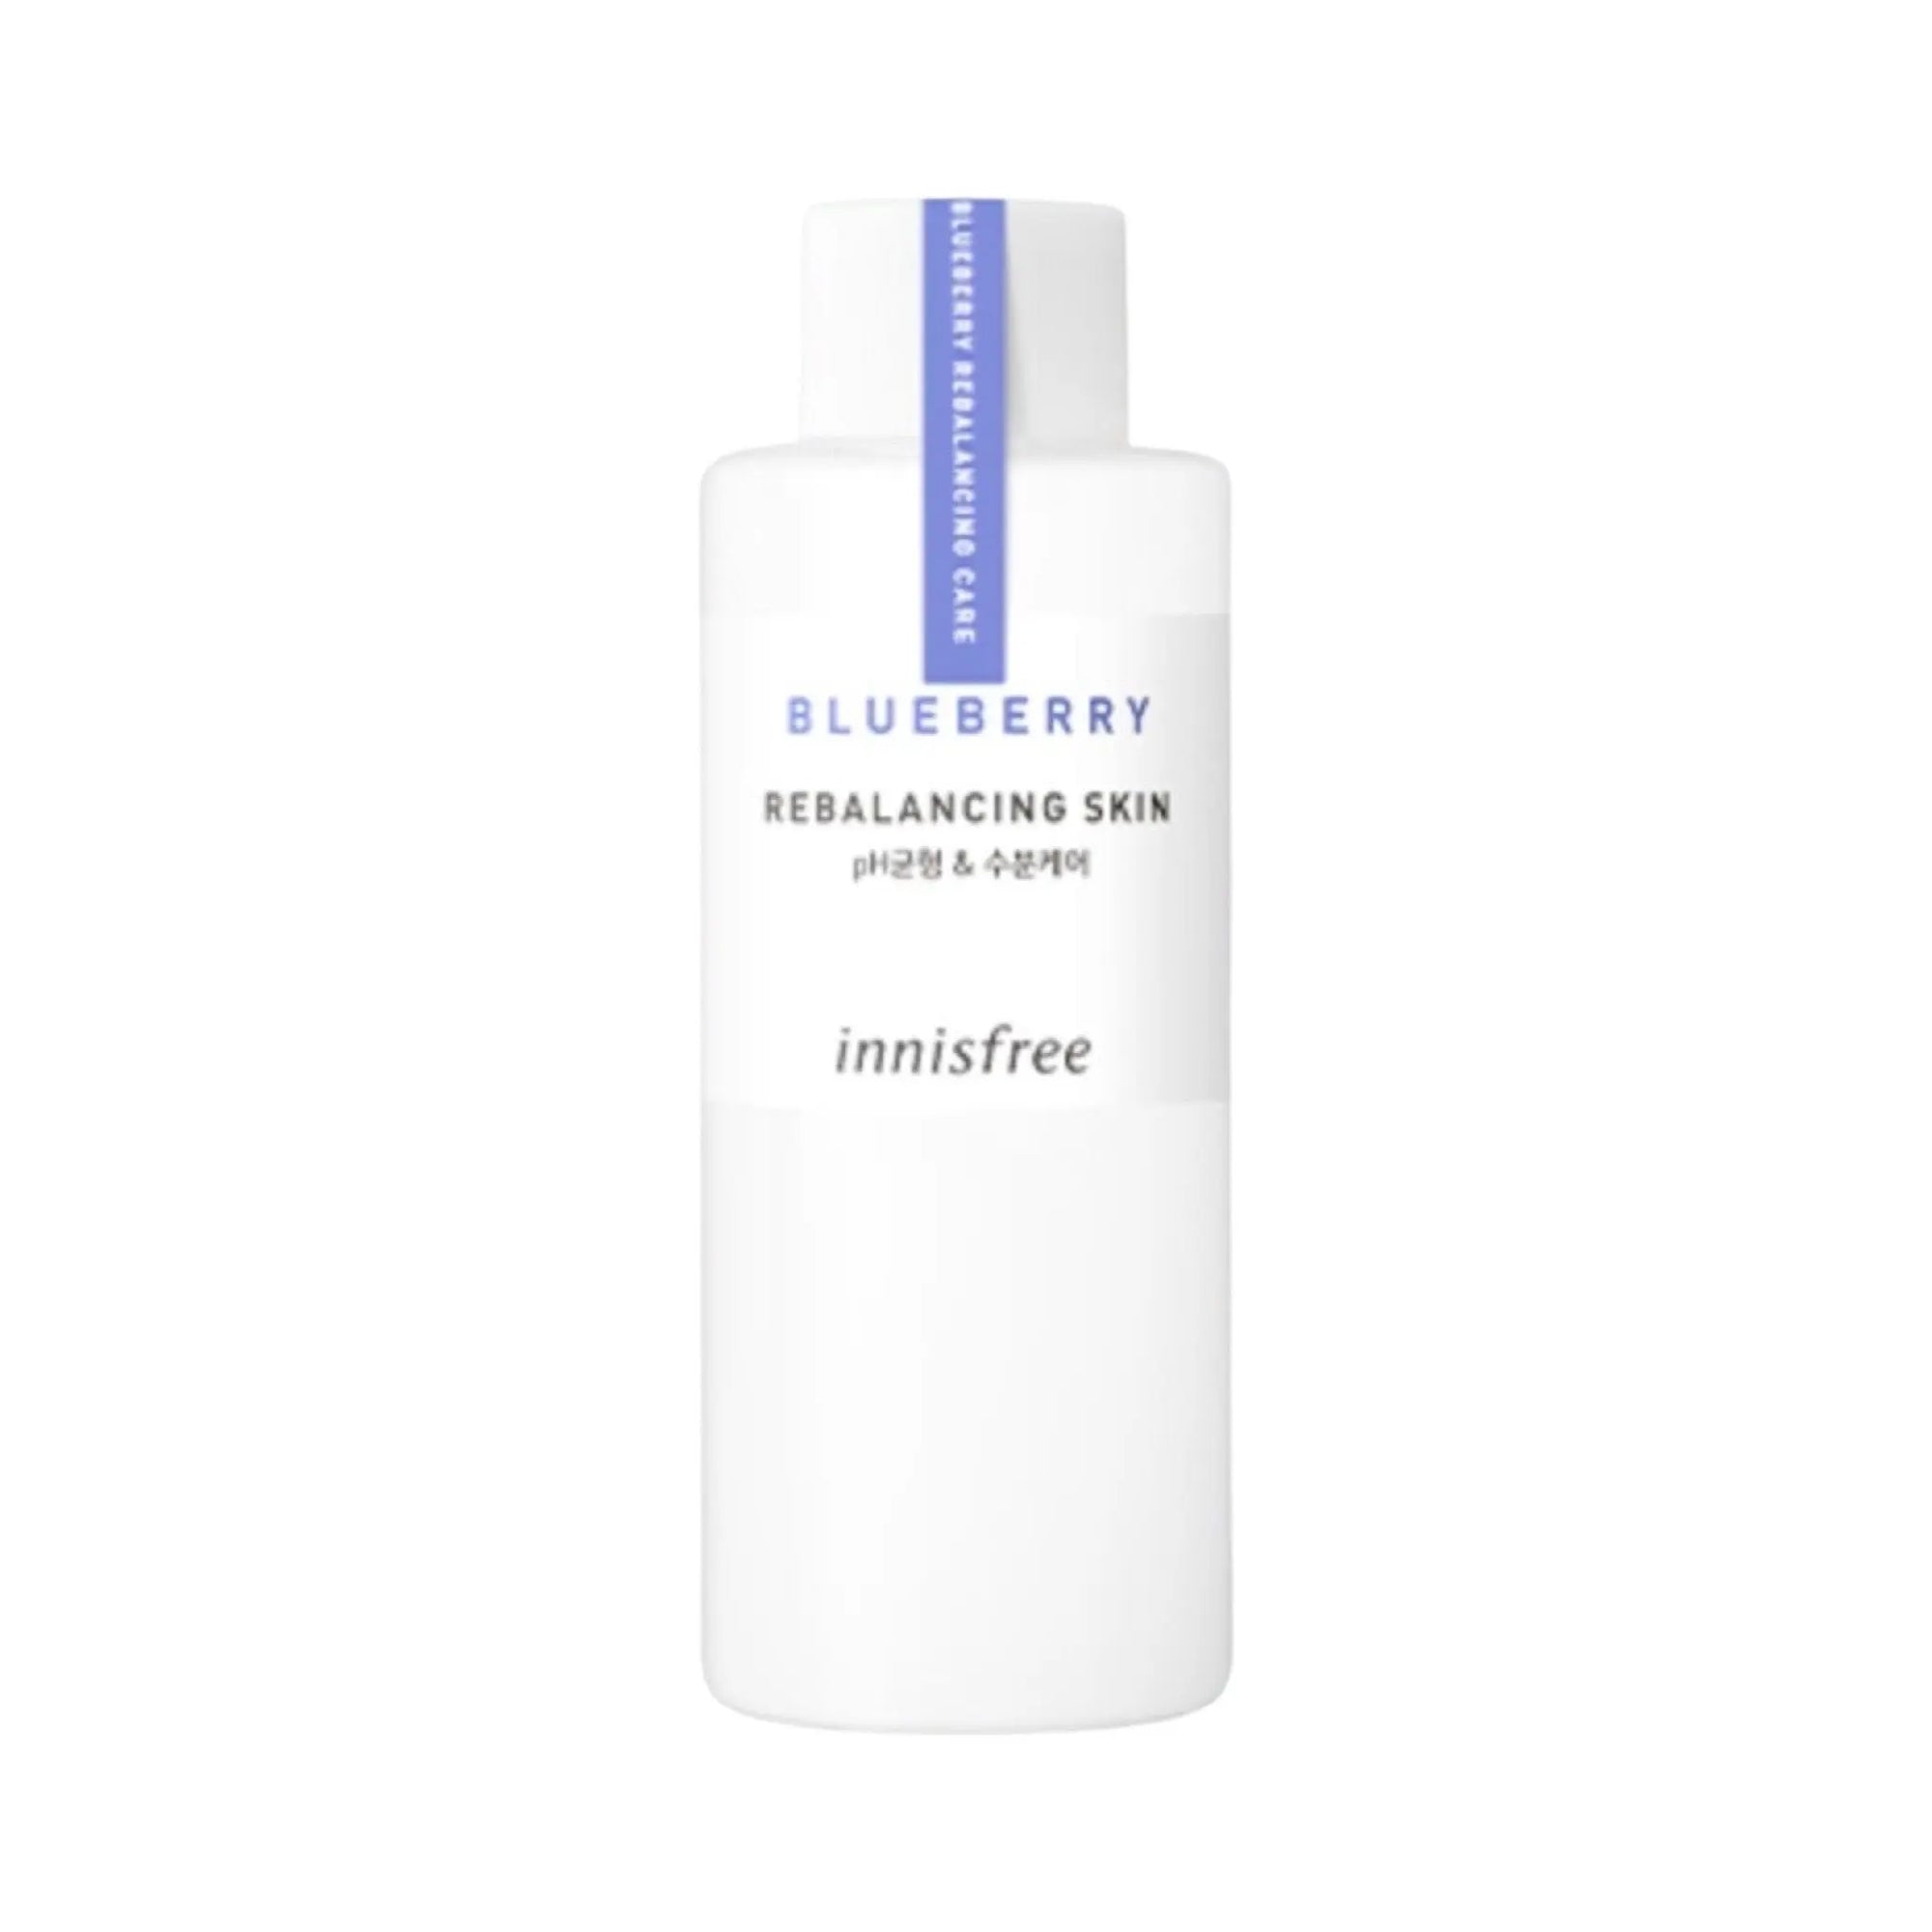 Innisfree - Blueberry Rebalancing Skin 150mL Innisfree